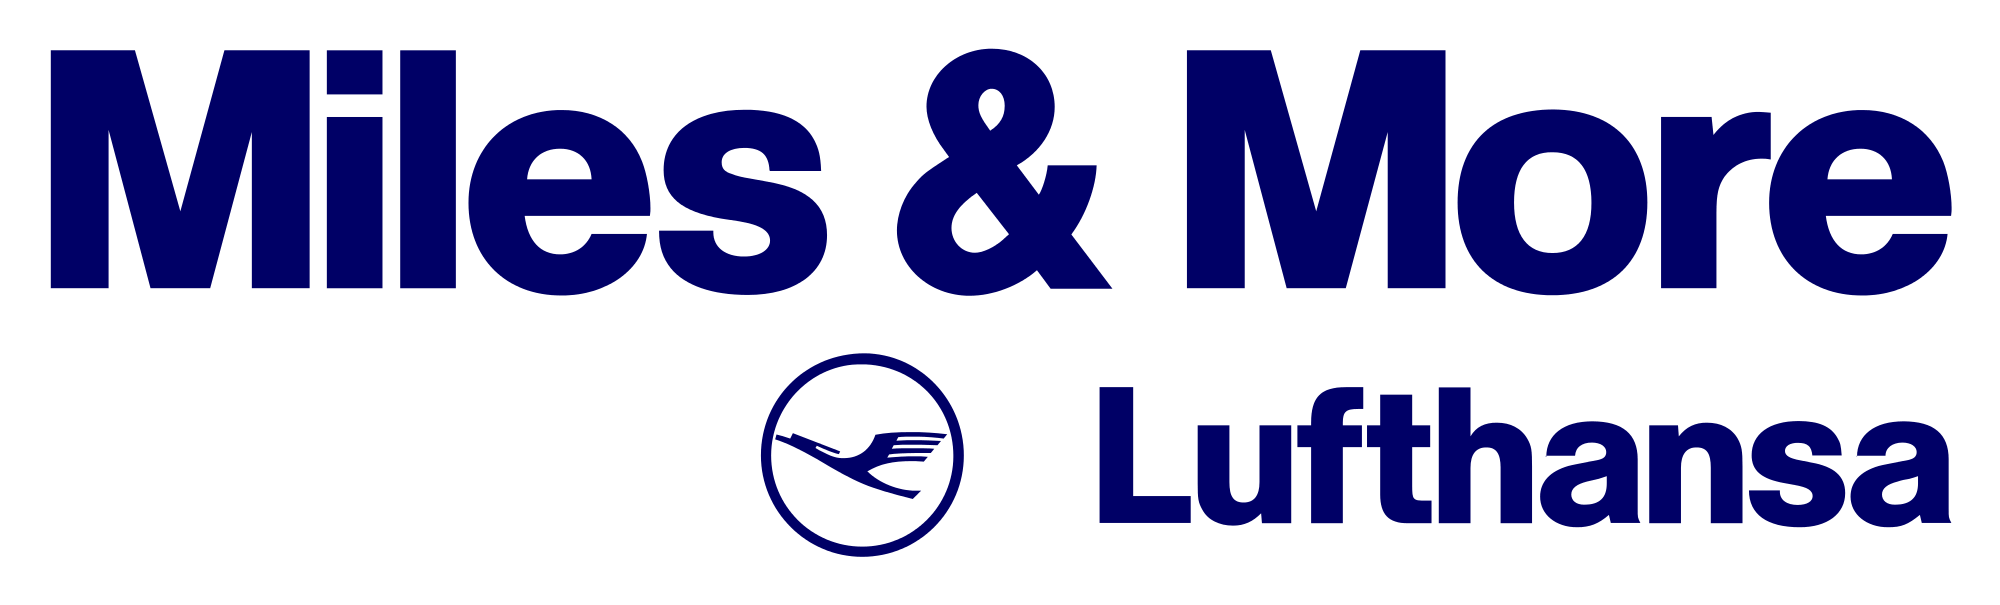 Lufthansa Miles and More Logo